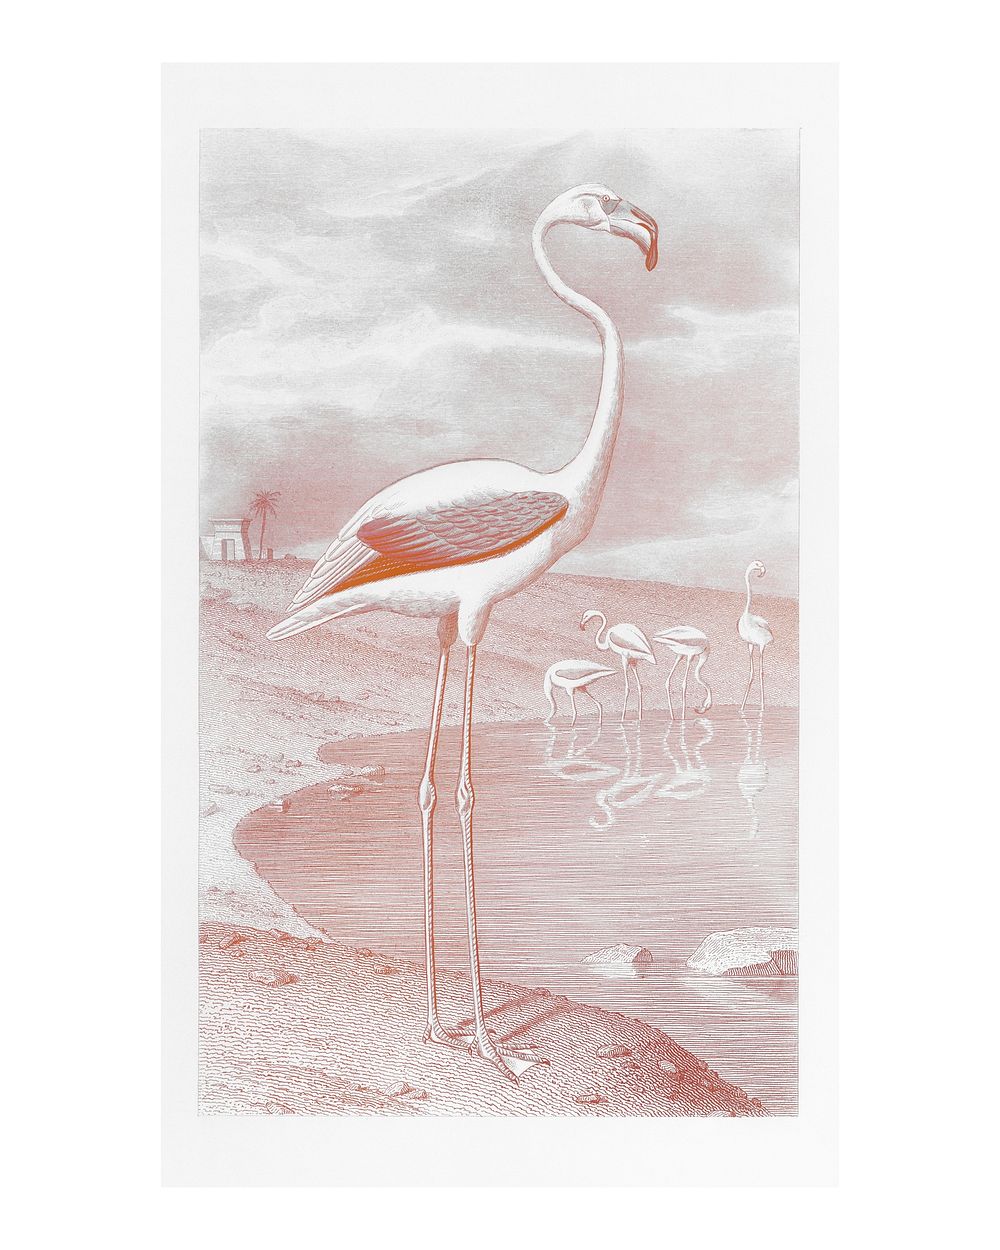 White flamingo in its natural habitat vintage illustration wall art print and poster design remix from original artwork.